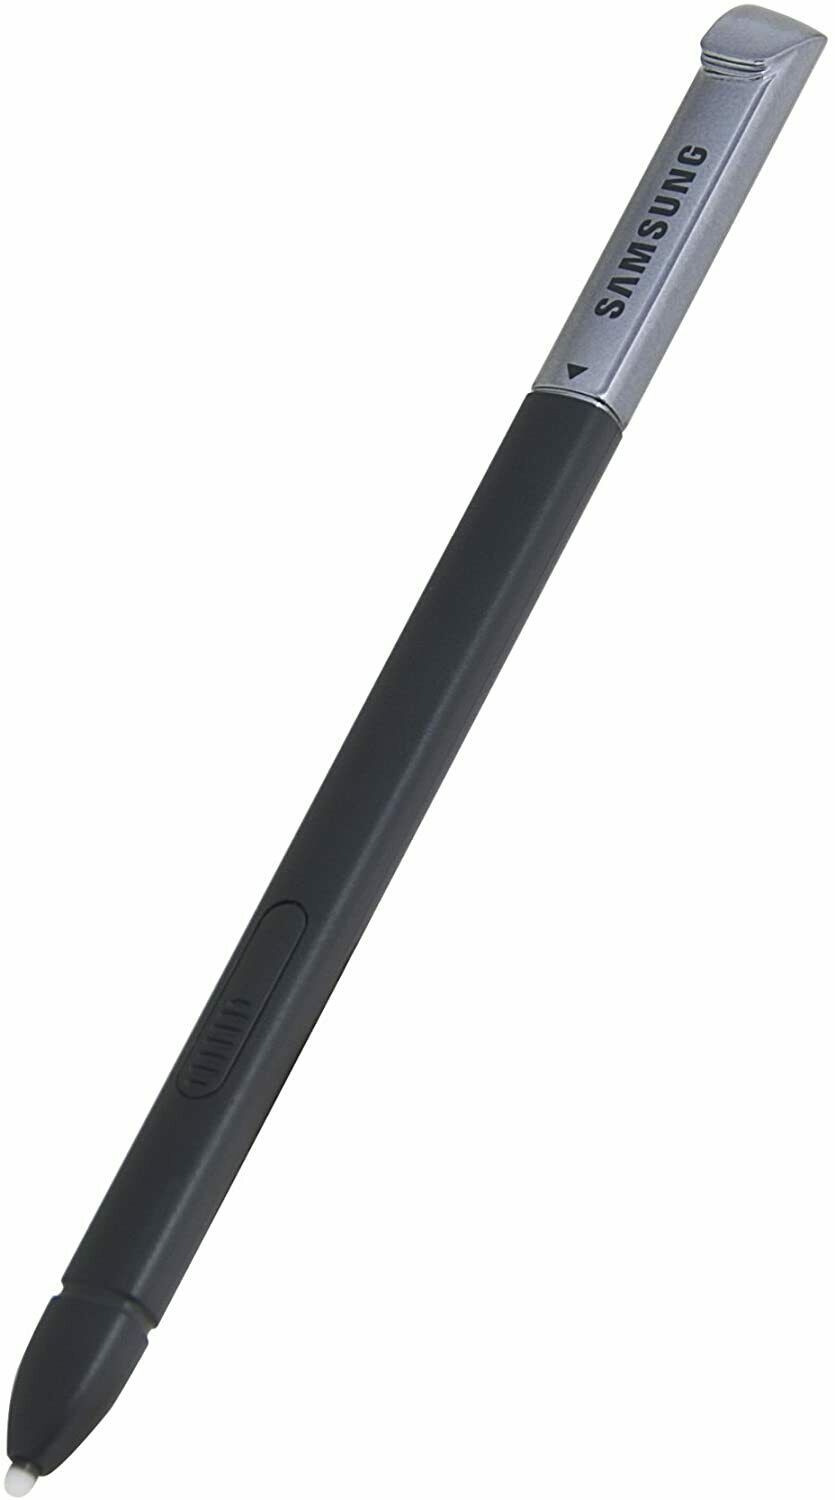 Samsung Galaxy Note 2 Galaxy Replacement Stylus Pen, Black - $9.89